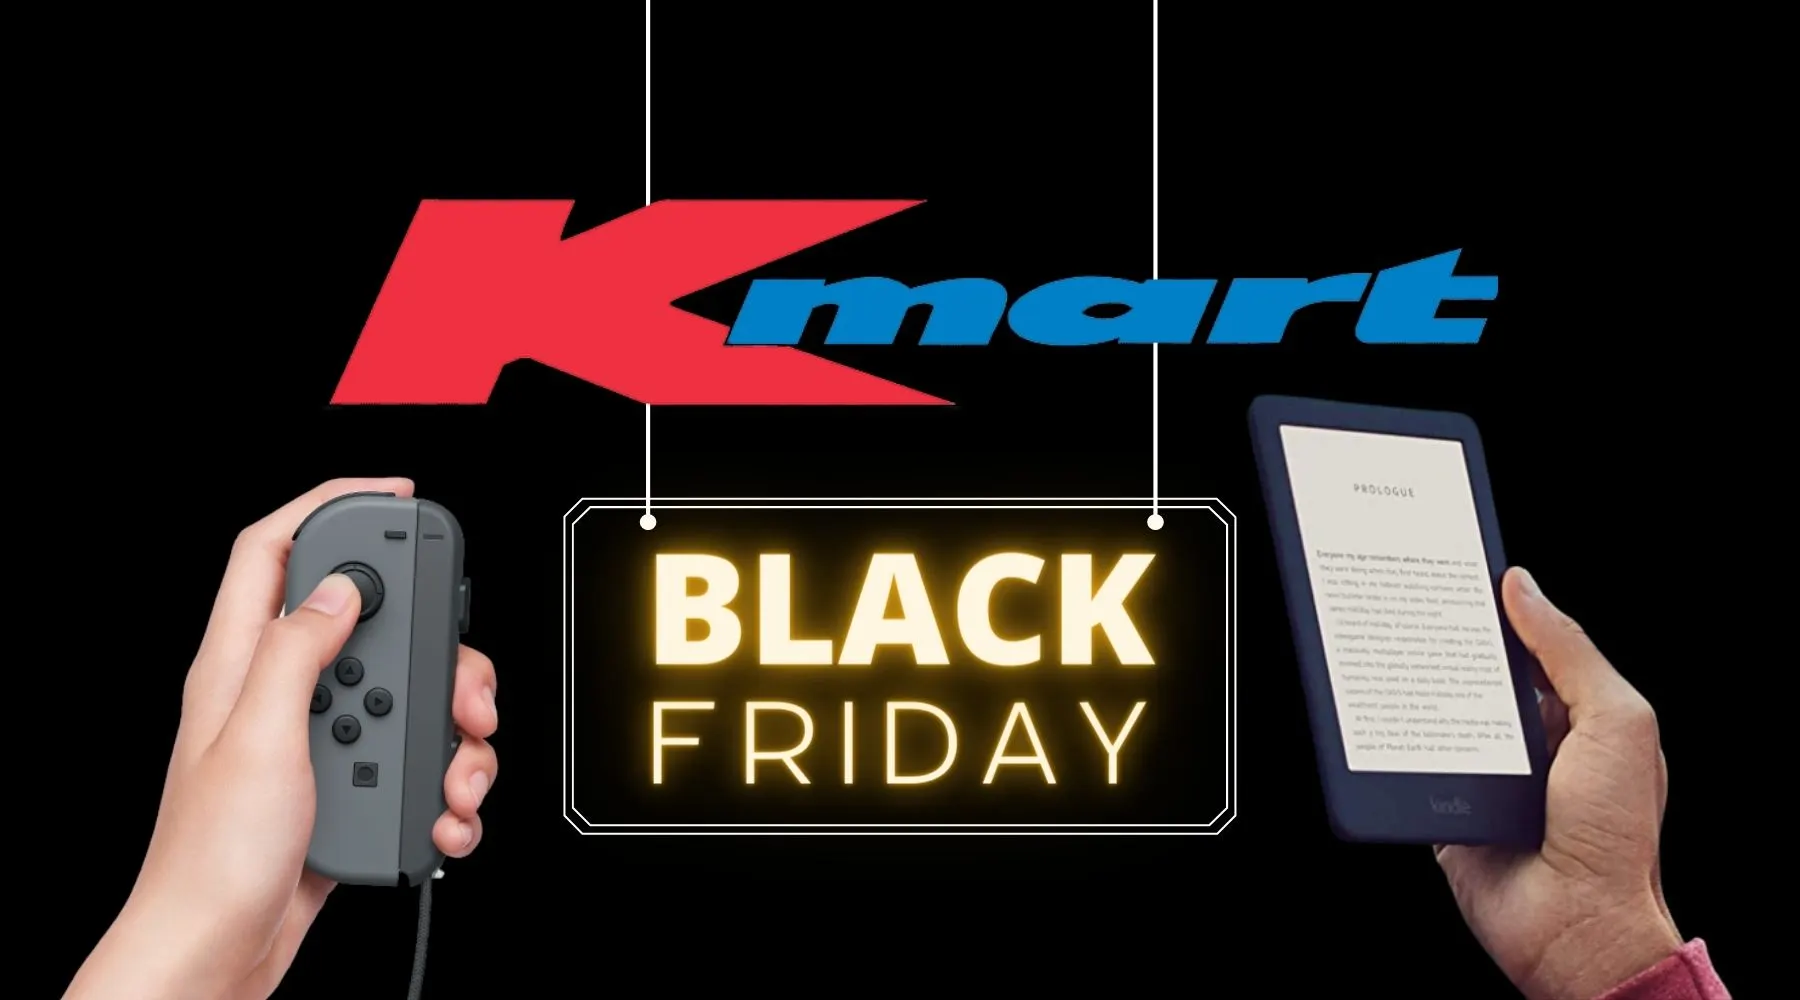 Kmart selling $49 designer hardcover books in Black Friday deal